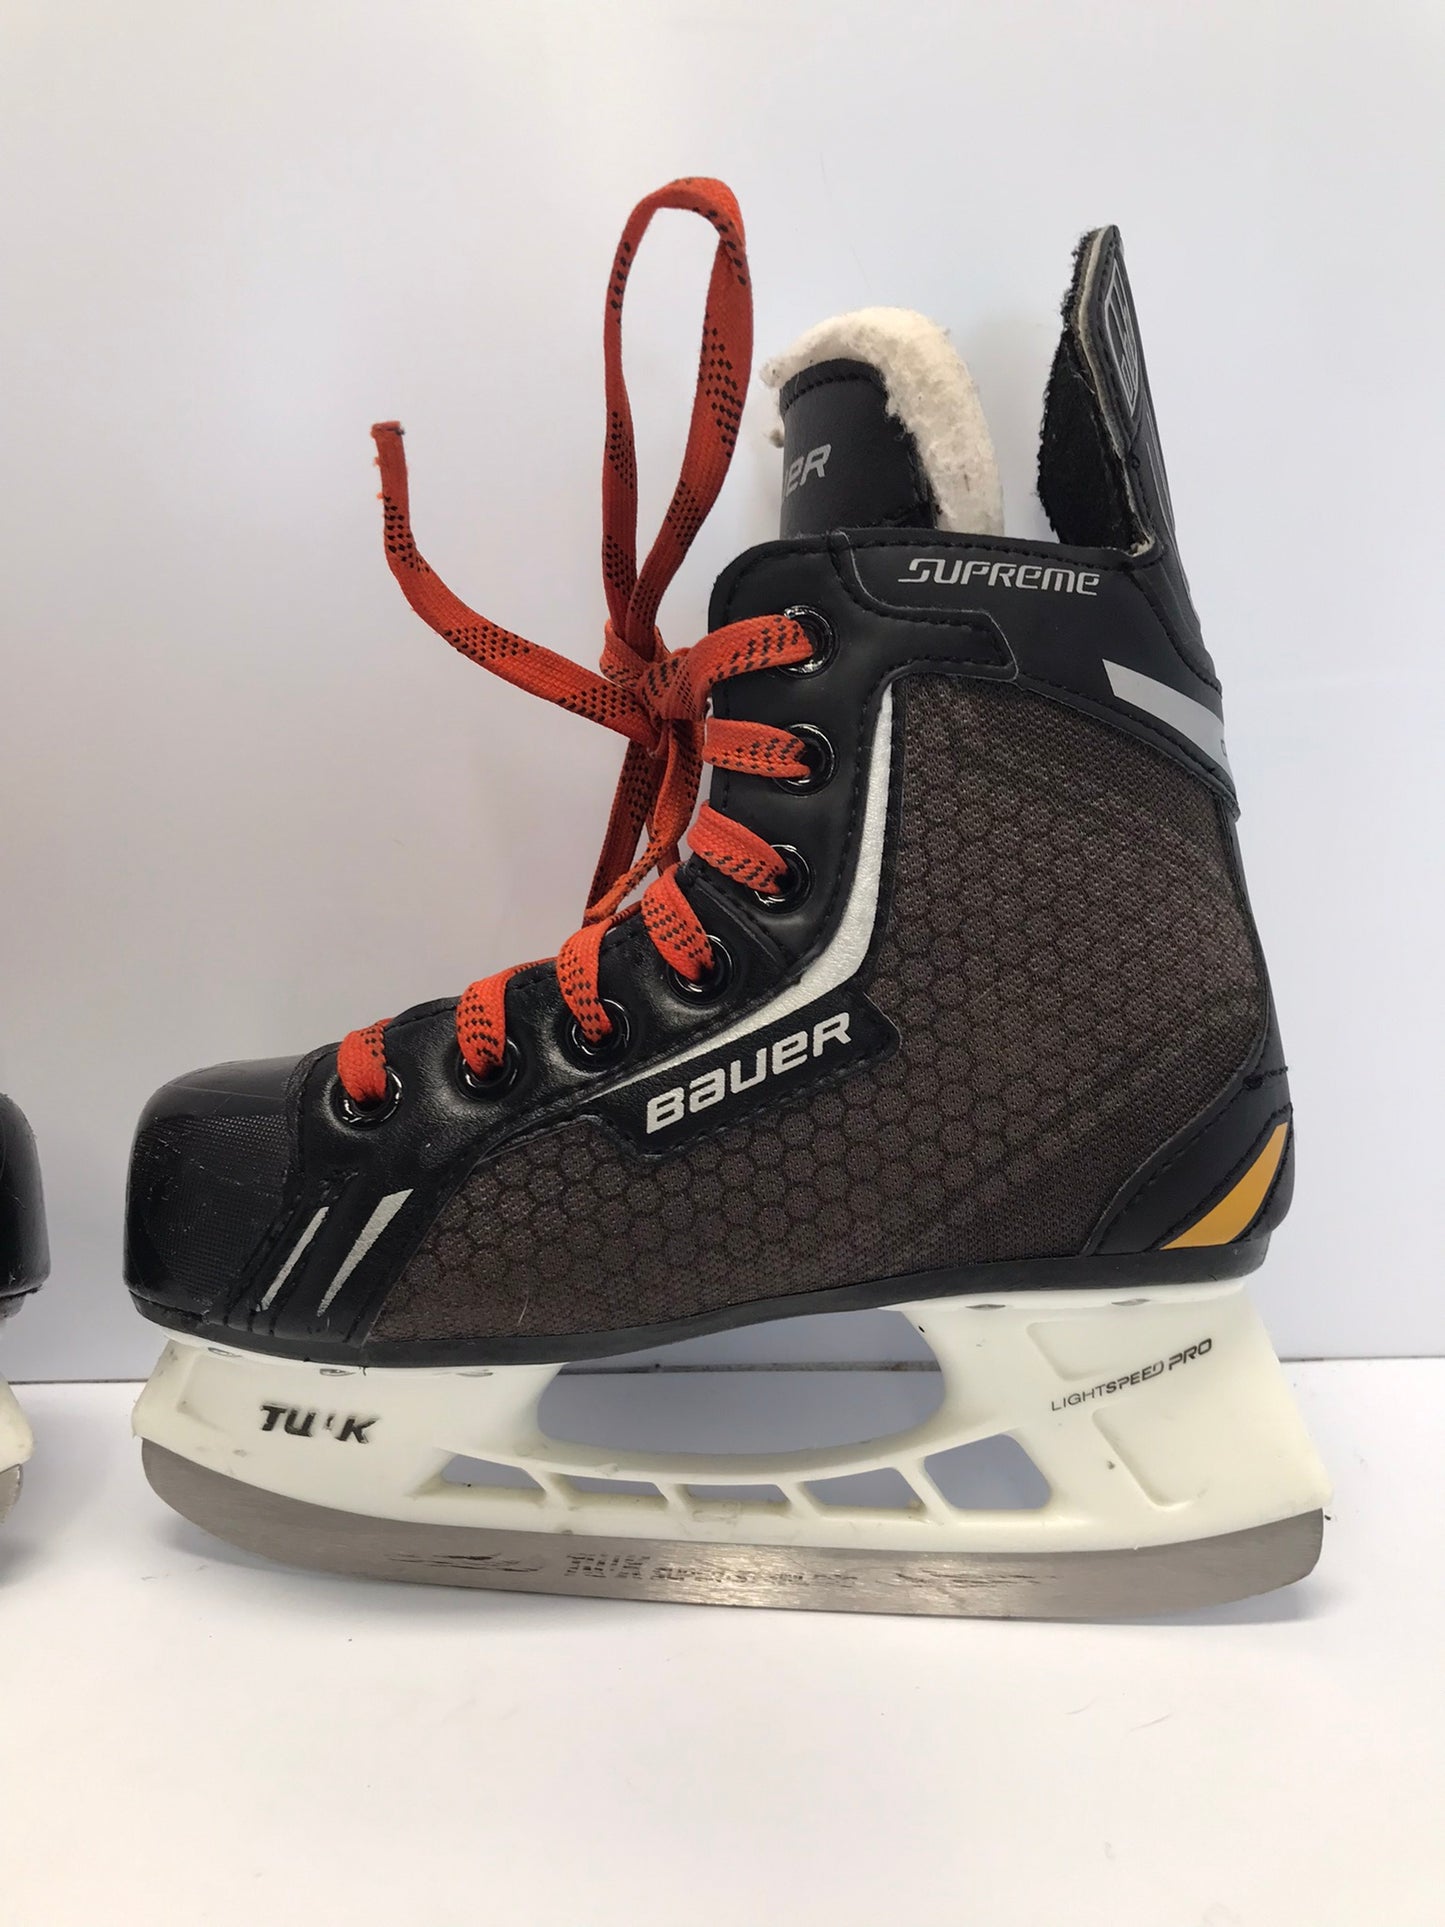 Hockey Skates Child Size 13 Shoe Size Bauer Supreme One .4 Excellent